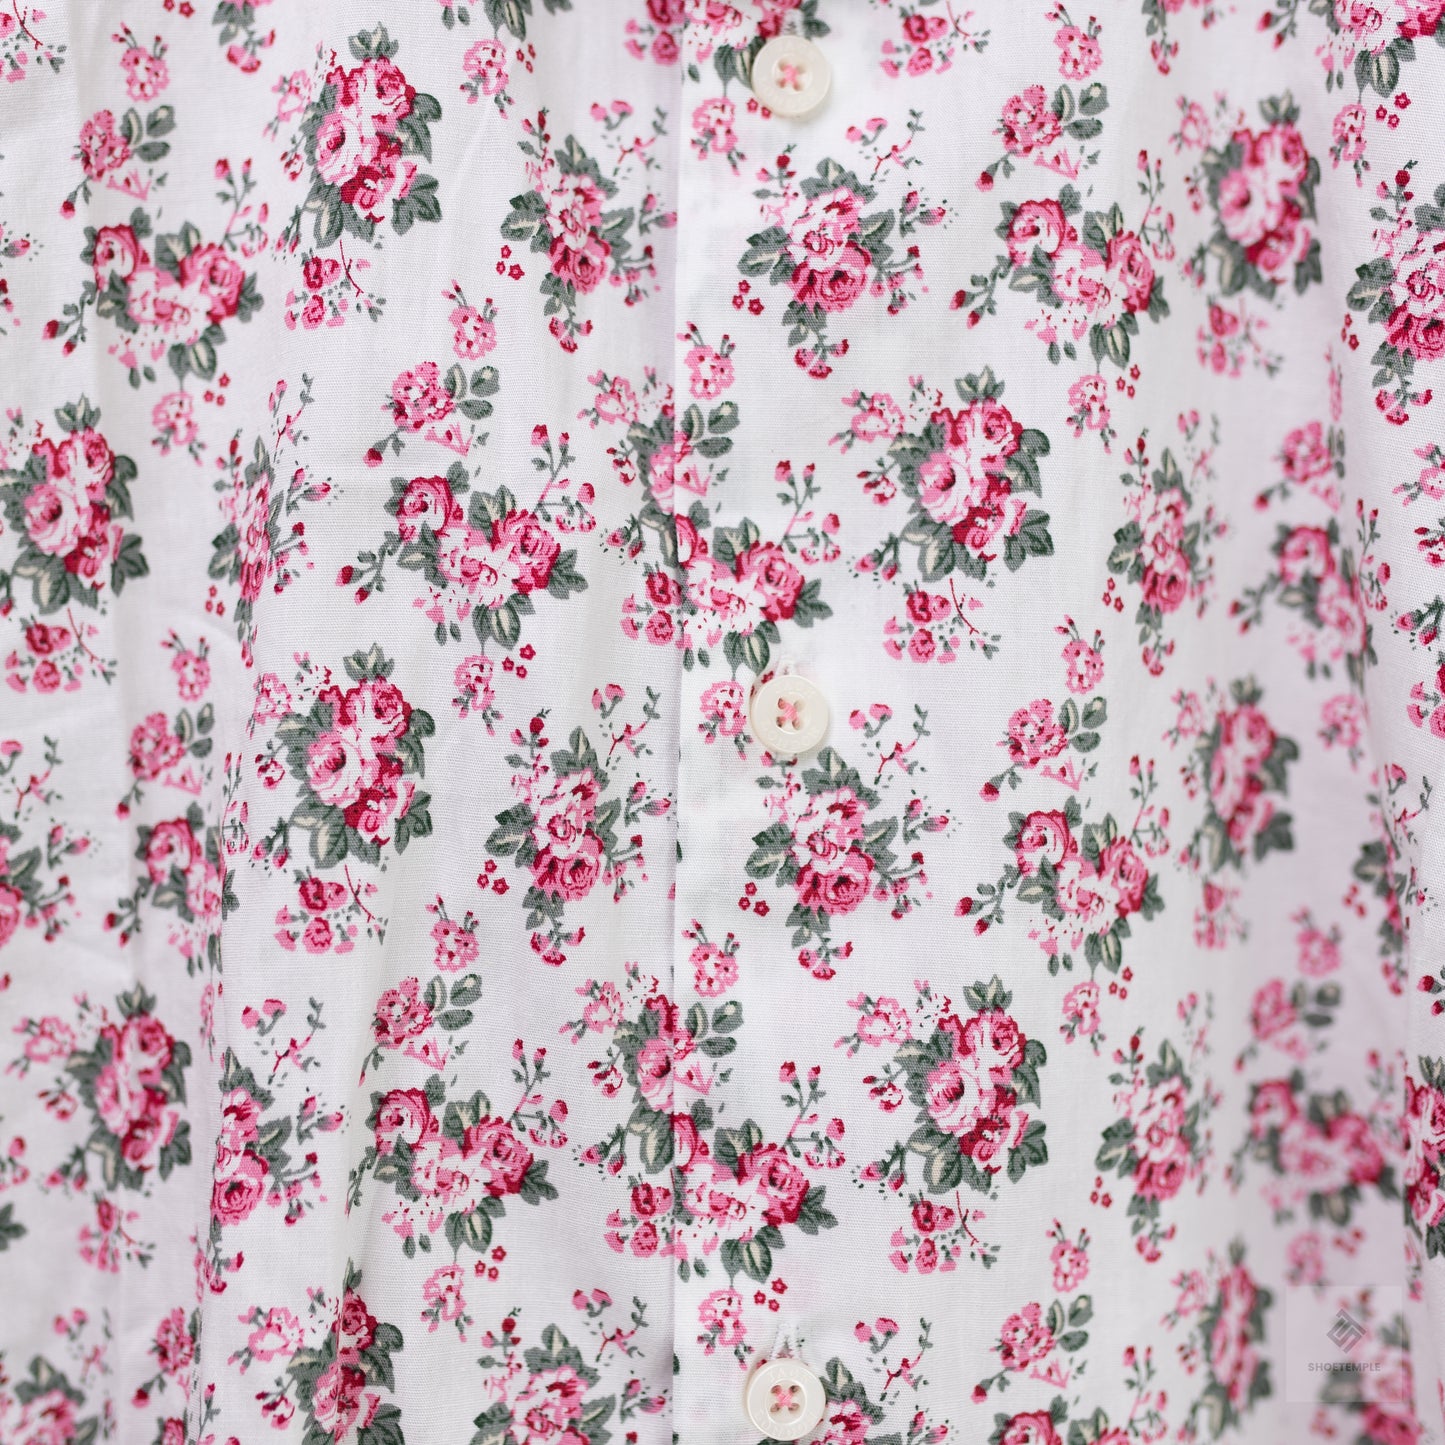 Jack London Flower Shirt